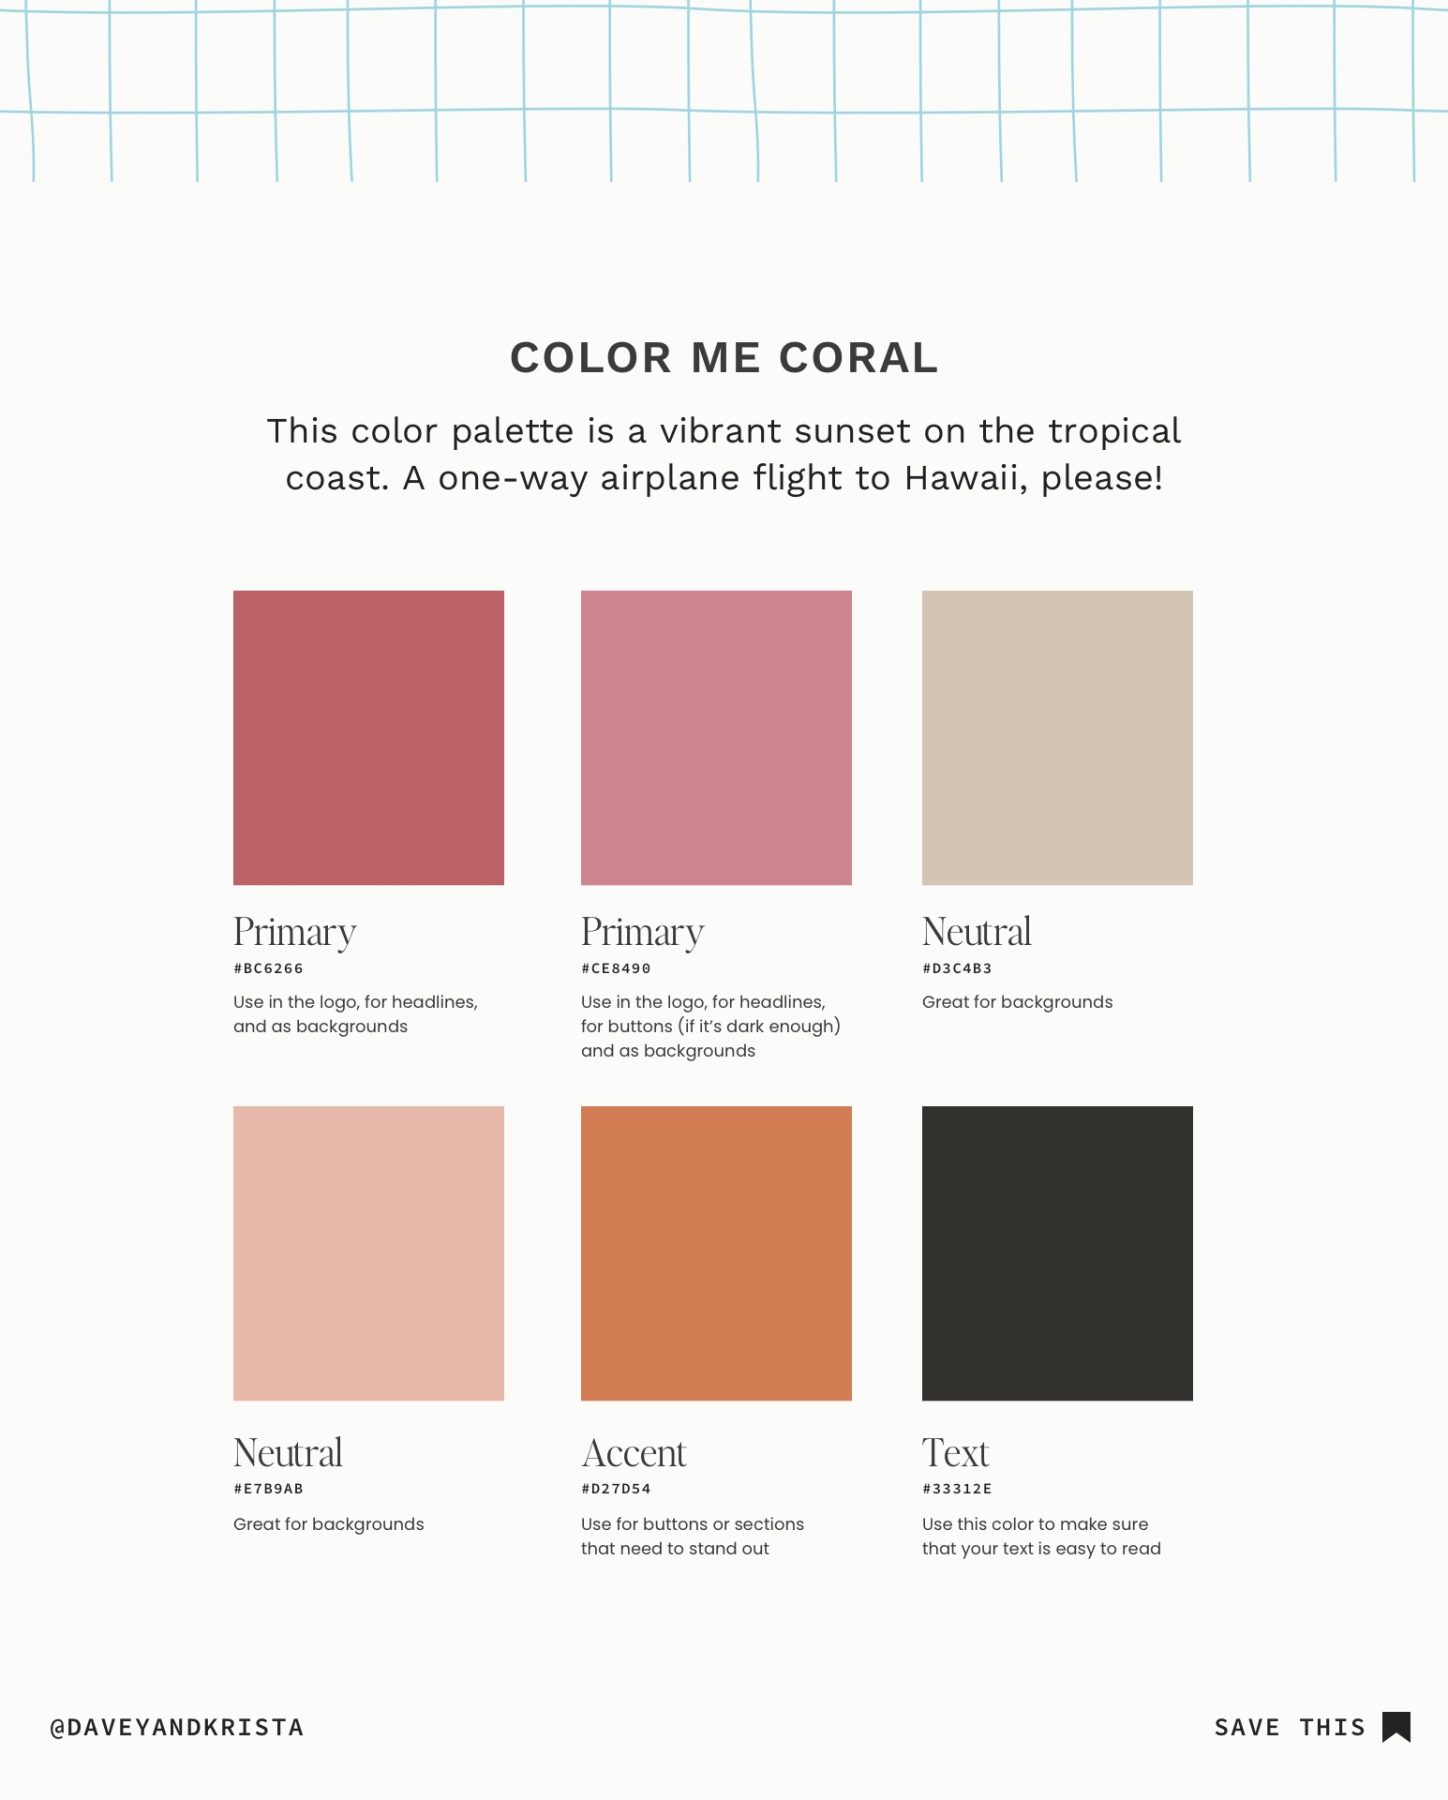 Color Me Coral Color Palette for websites and brands.